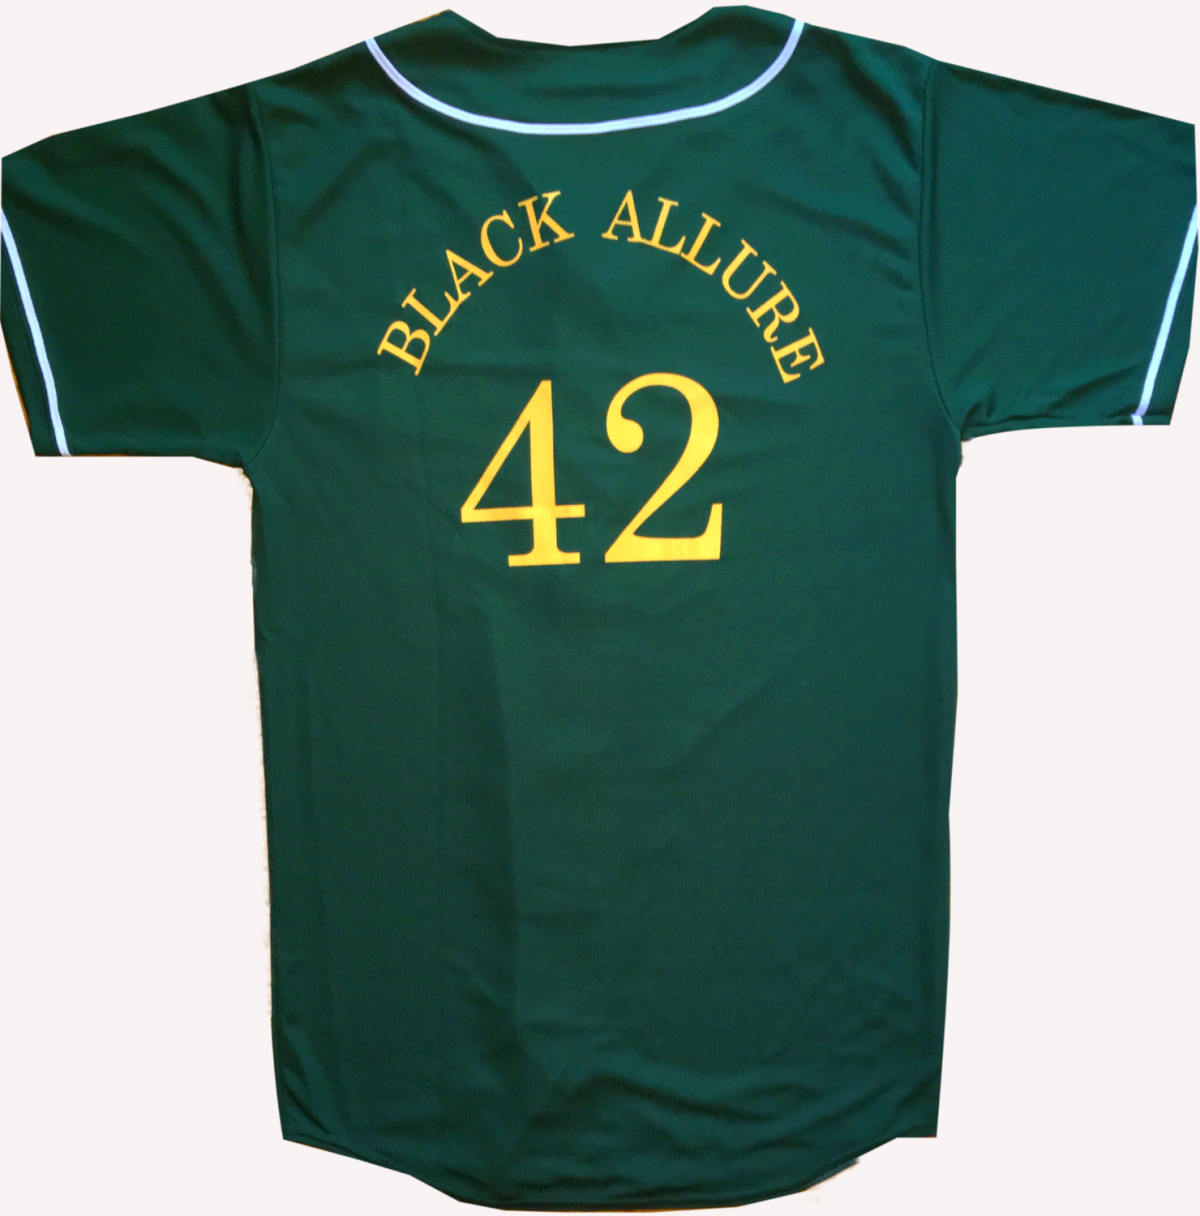 Black Allure Baseball Jersey Green